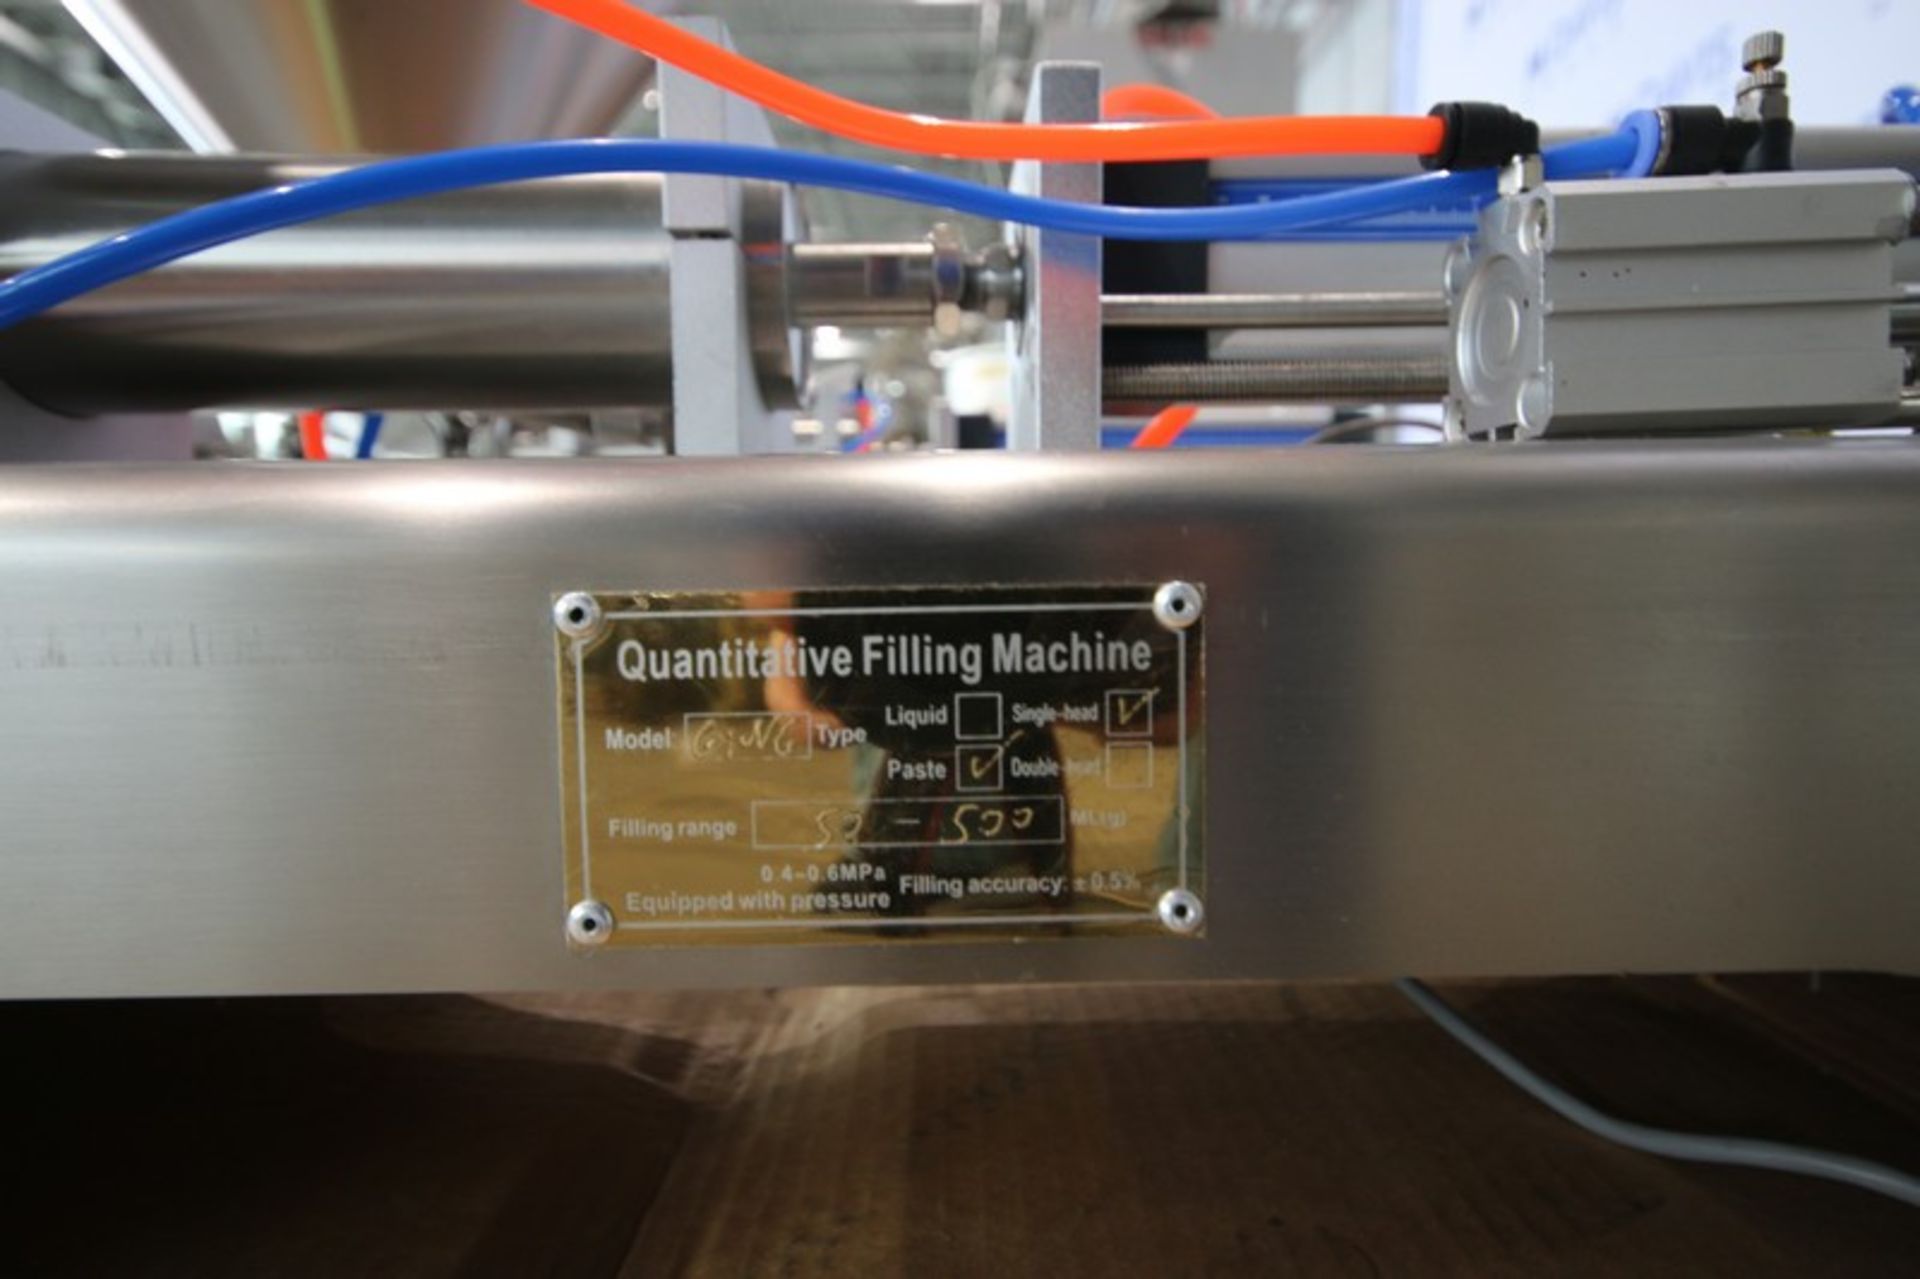 Quantitative Single Piston Filling Machine,M/N G46, Filling Range: 50-500 ML (g), with S/S Infeed - Image 6 of 7